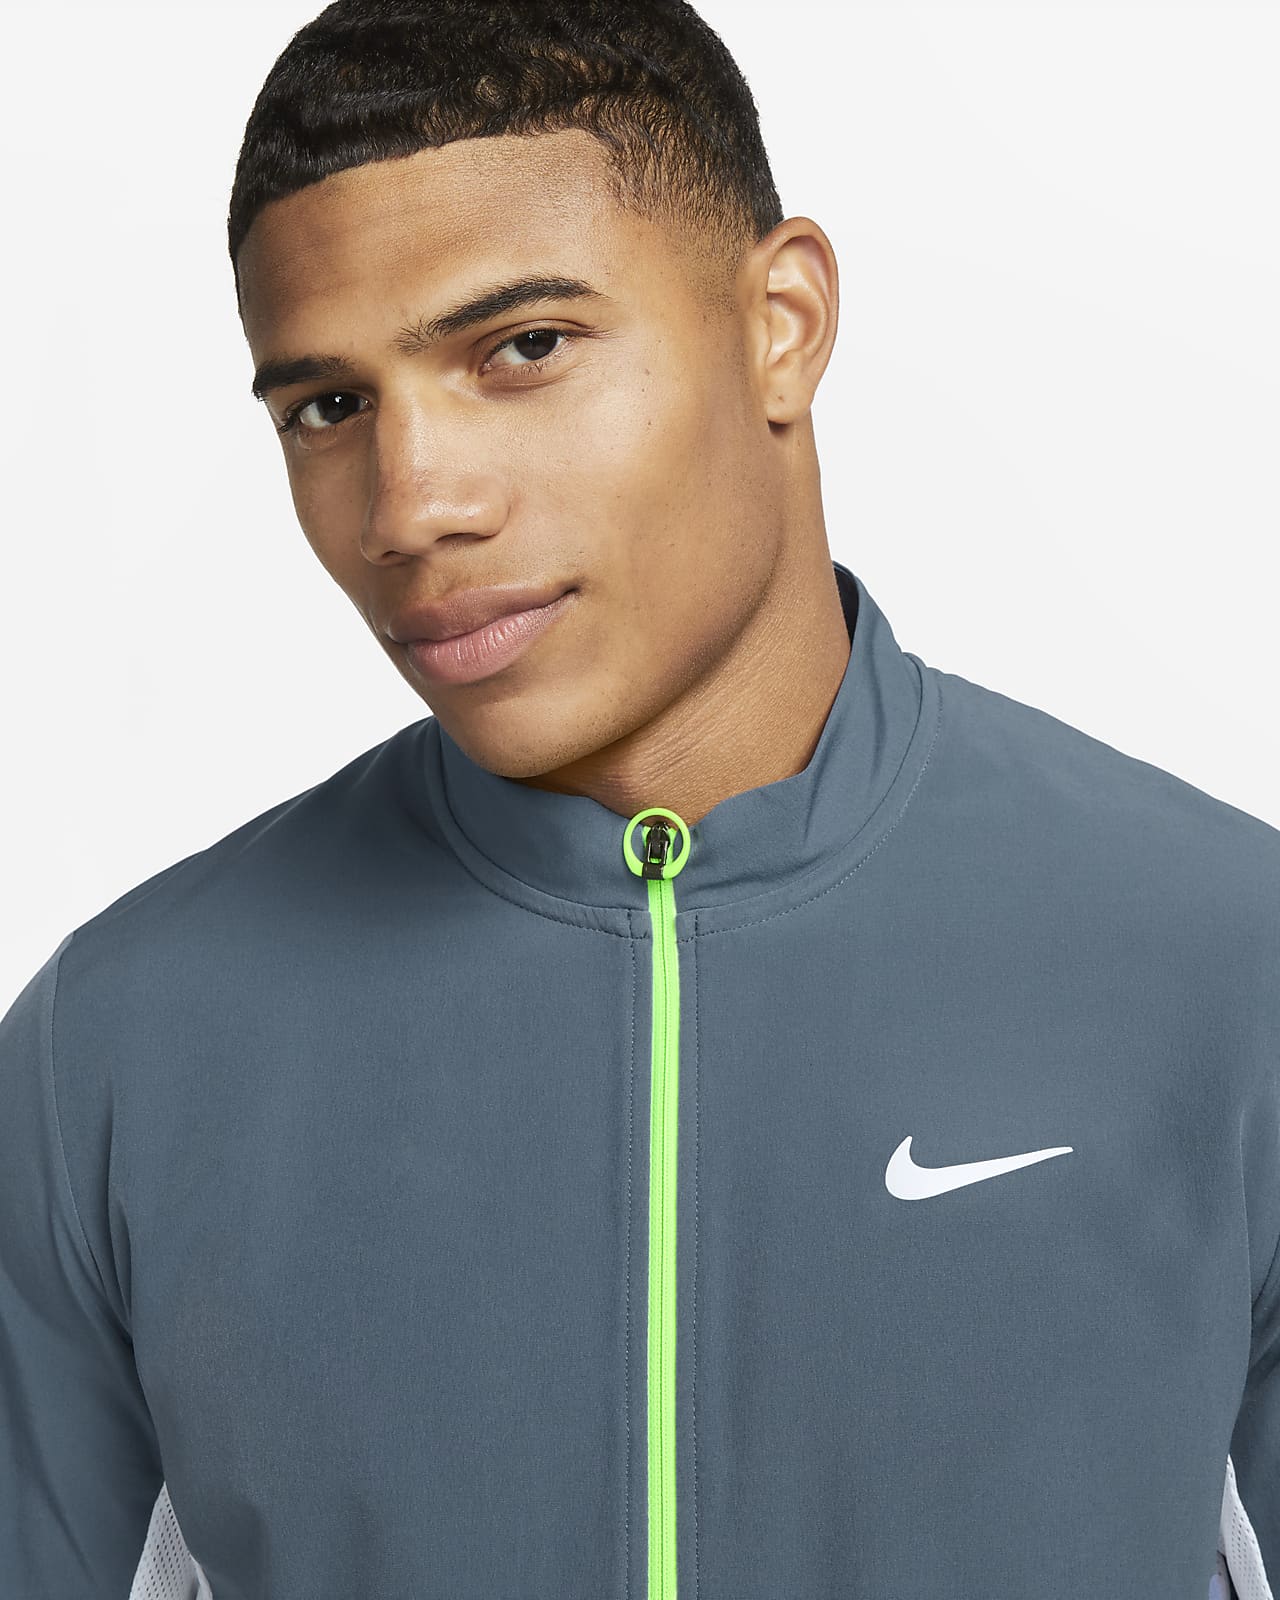 Vergissing alleen Oefening NikeCourt Advantage Men's Tennis Jacket. Nike.com